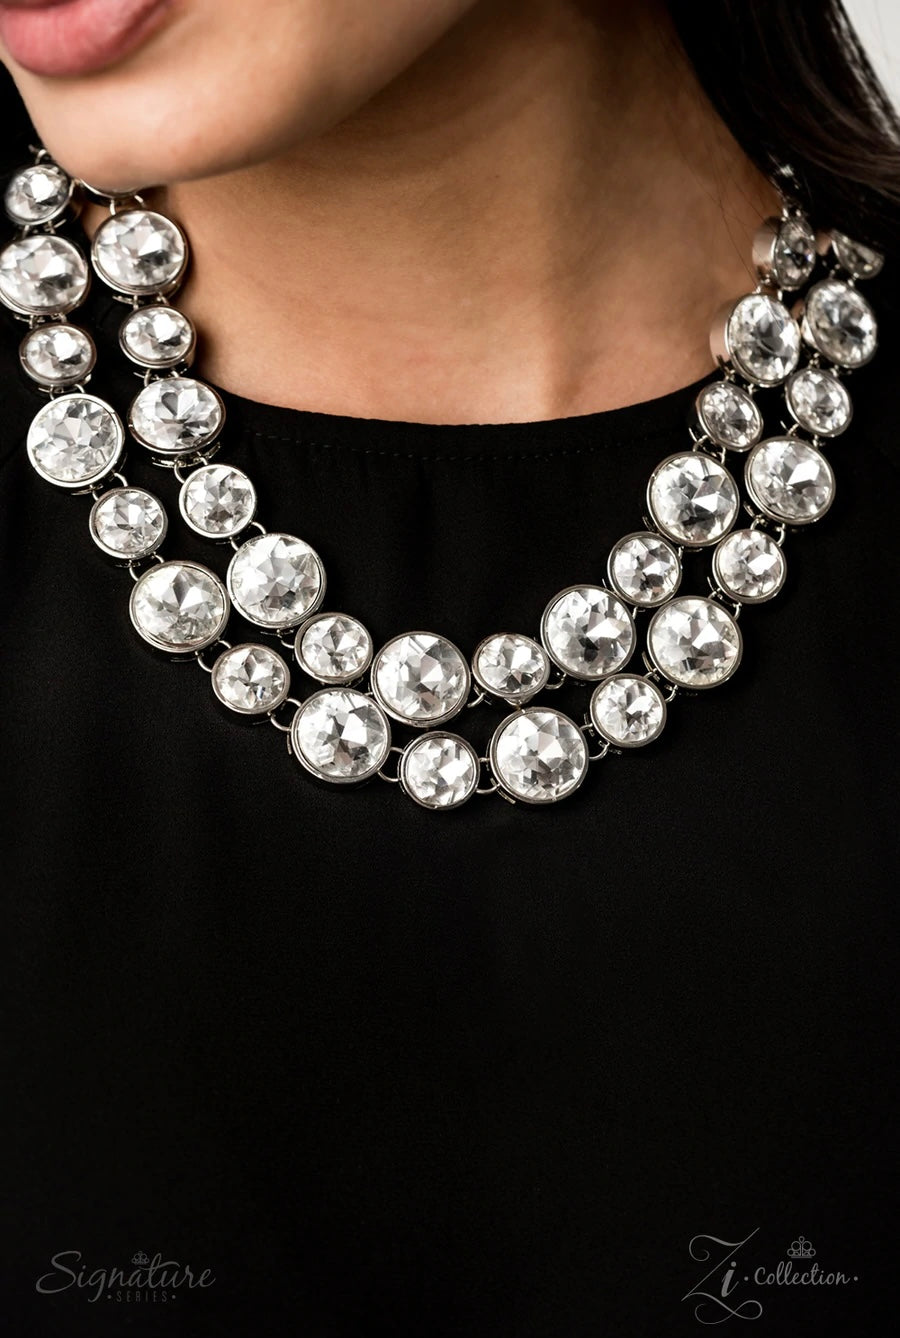 The Natasha Zi Collection Necklace